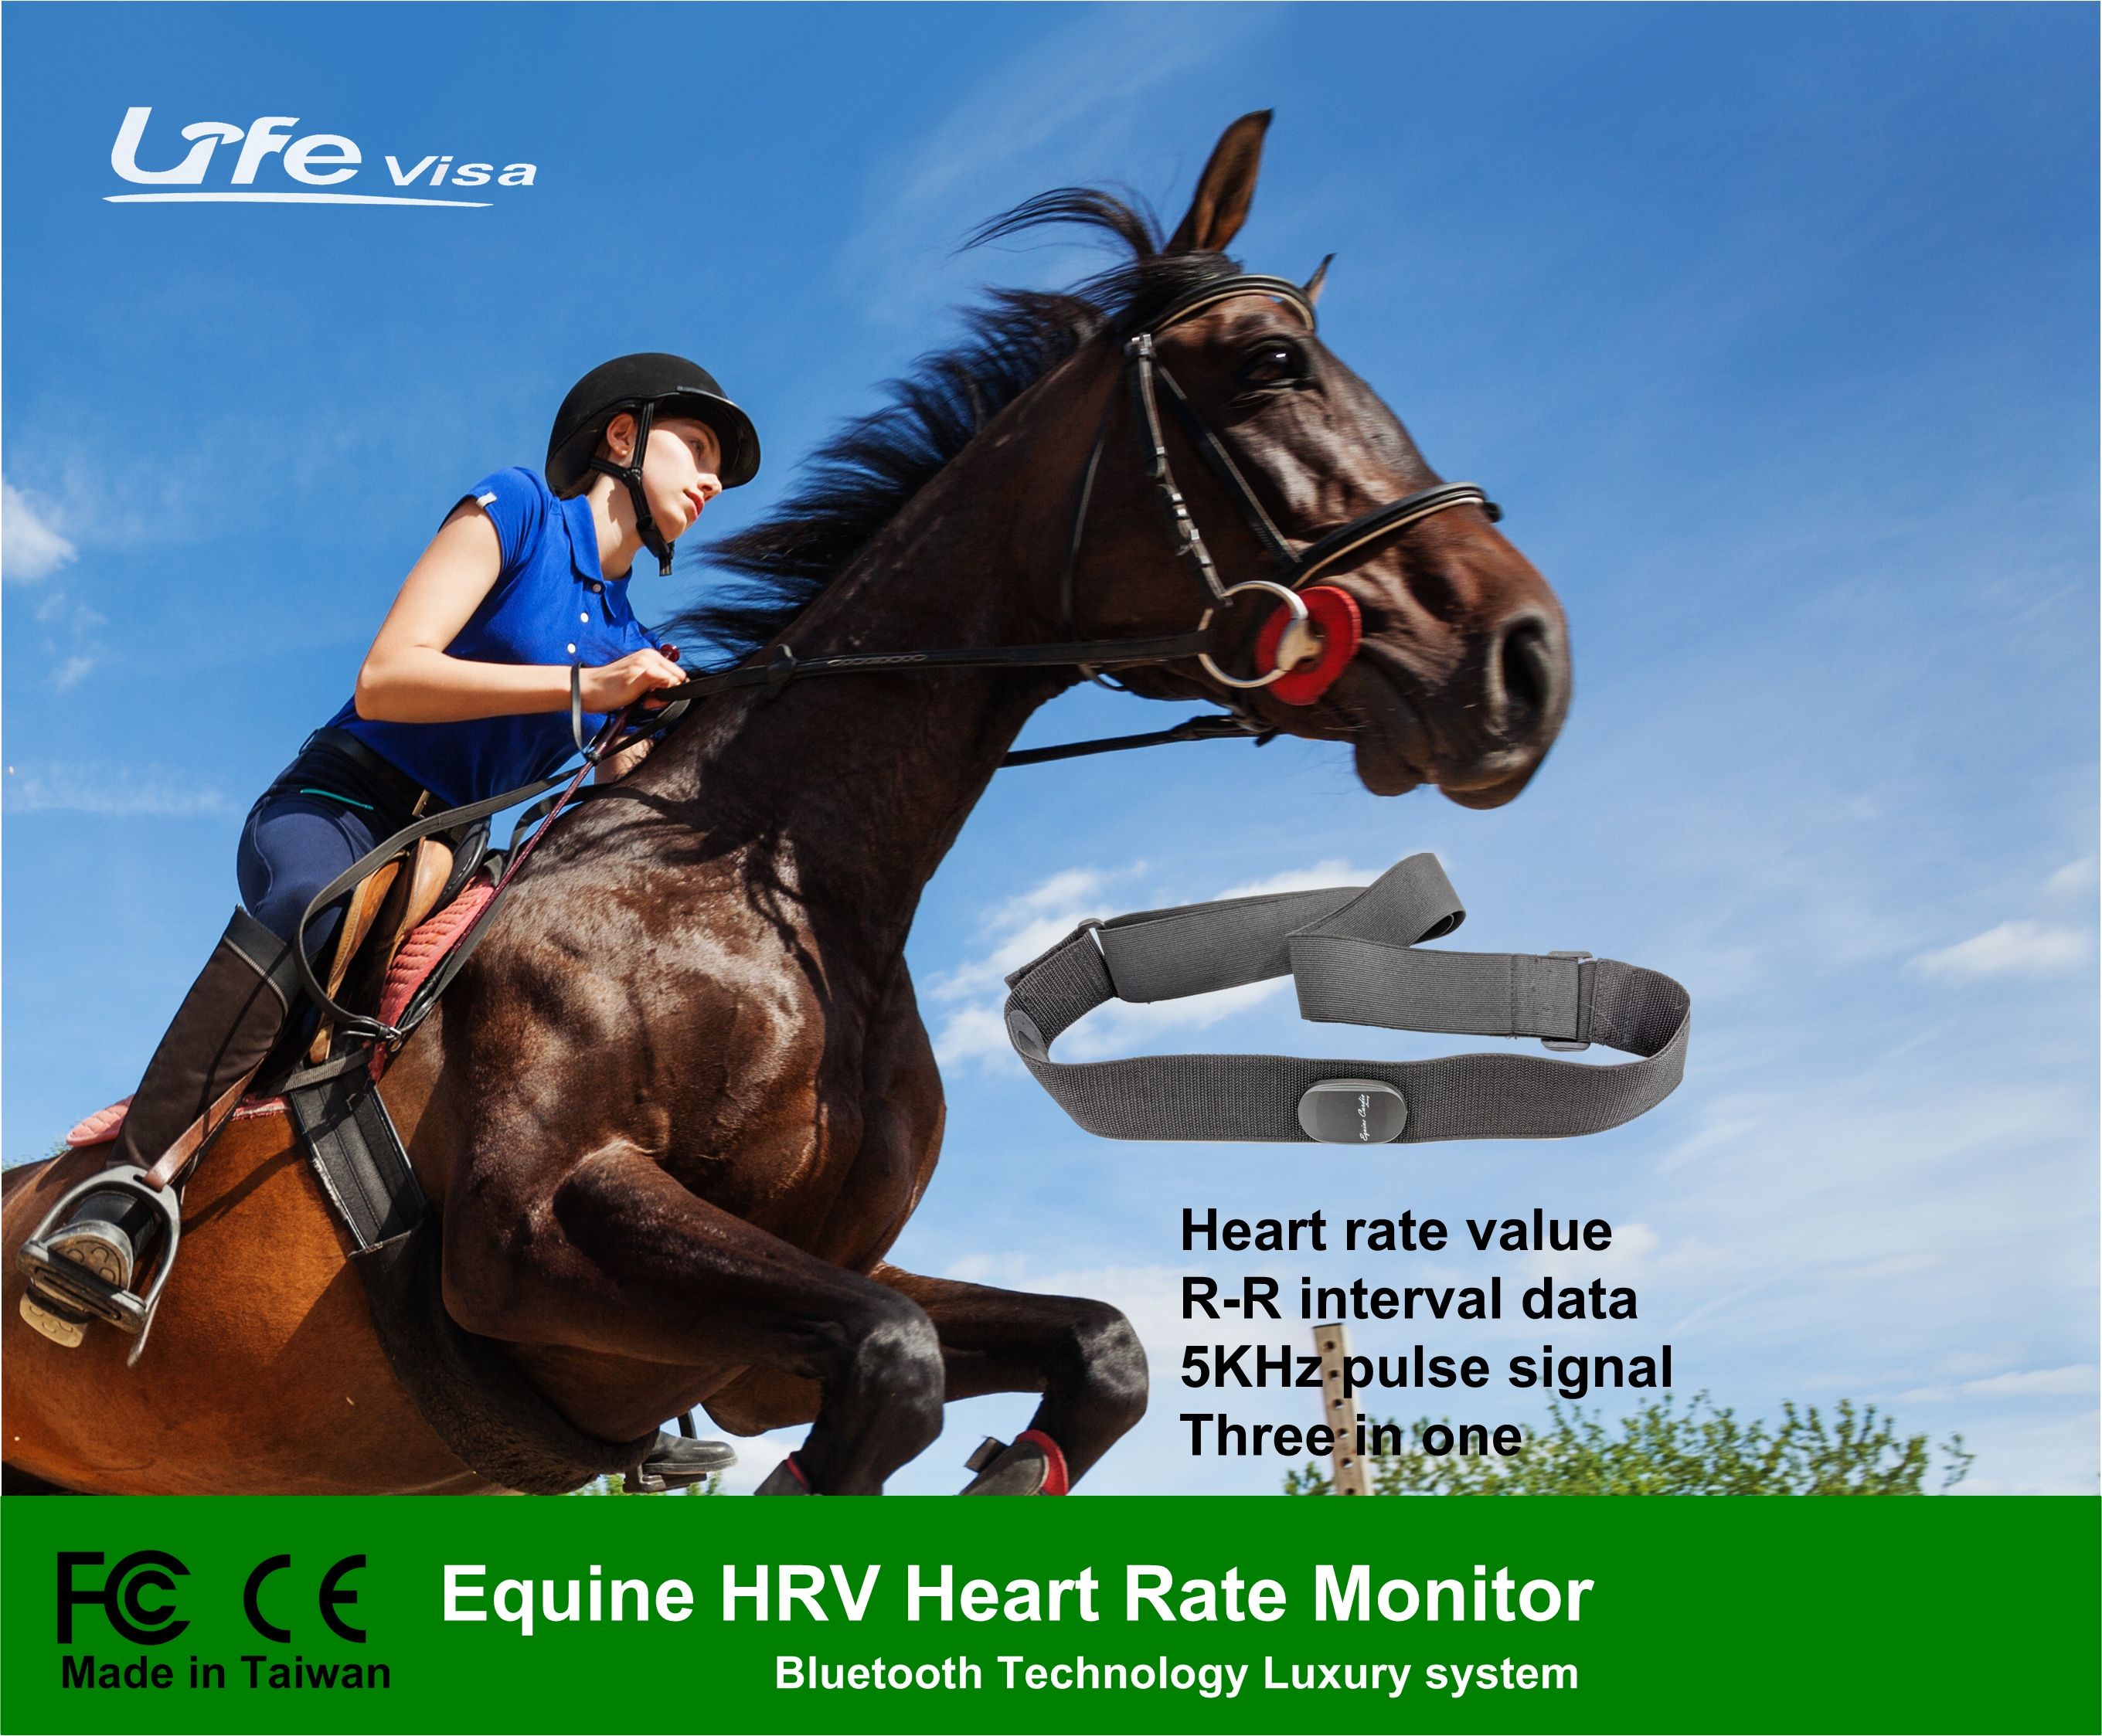 Lifevisa,lifevisa,Taiwan Biotronic,HRV horse heart rate monitor,heart rate monitor,Biotronic pulse